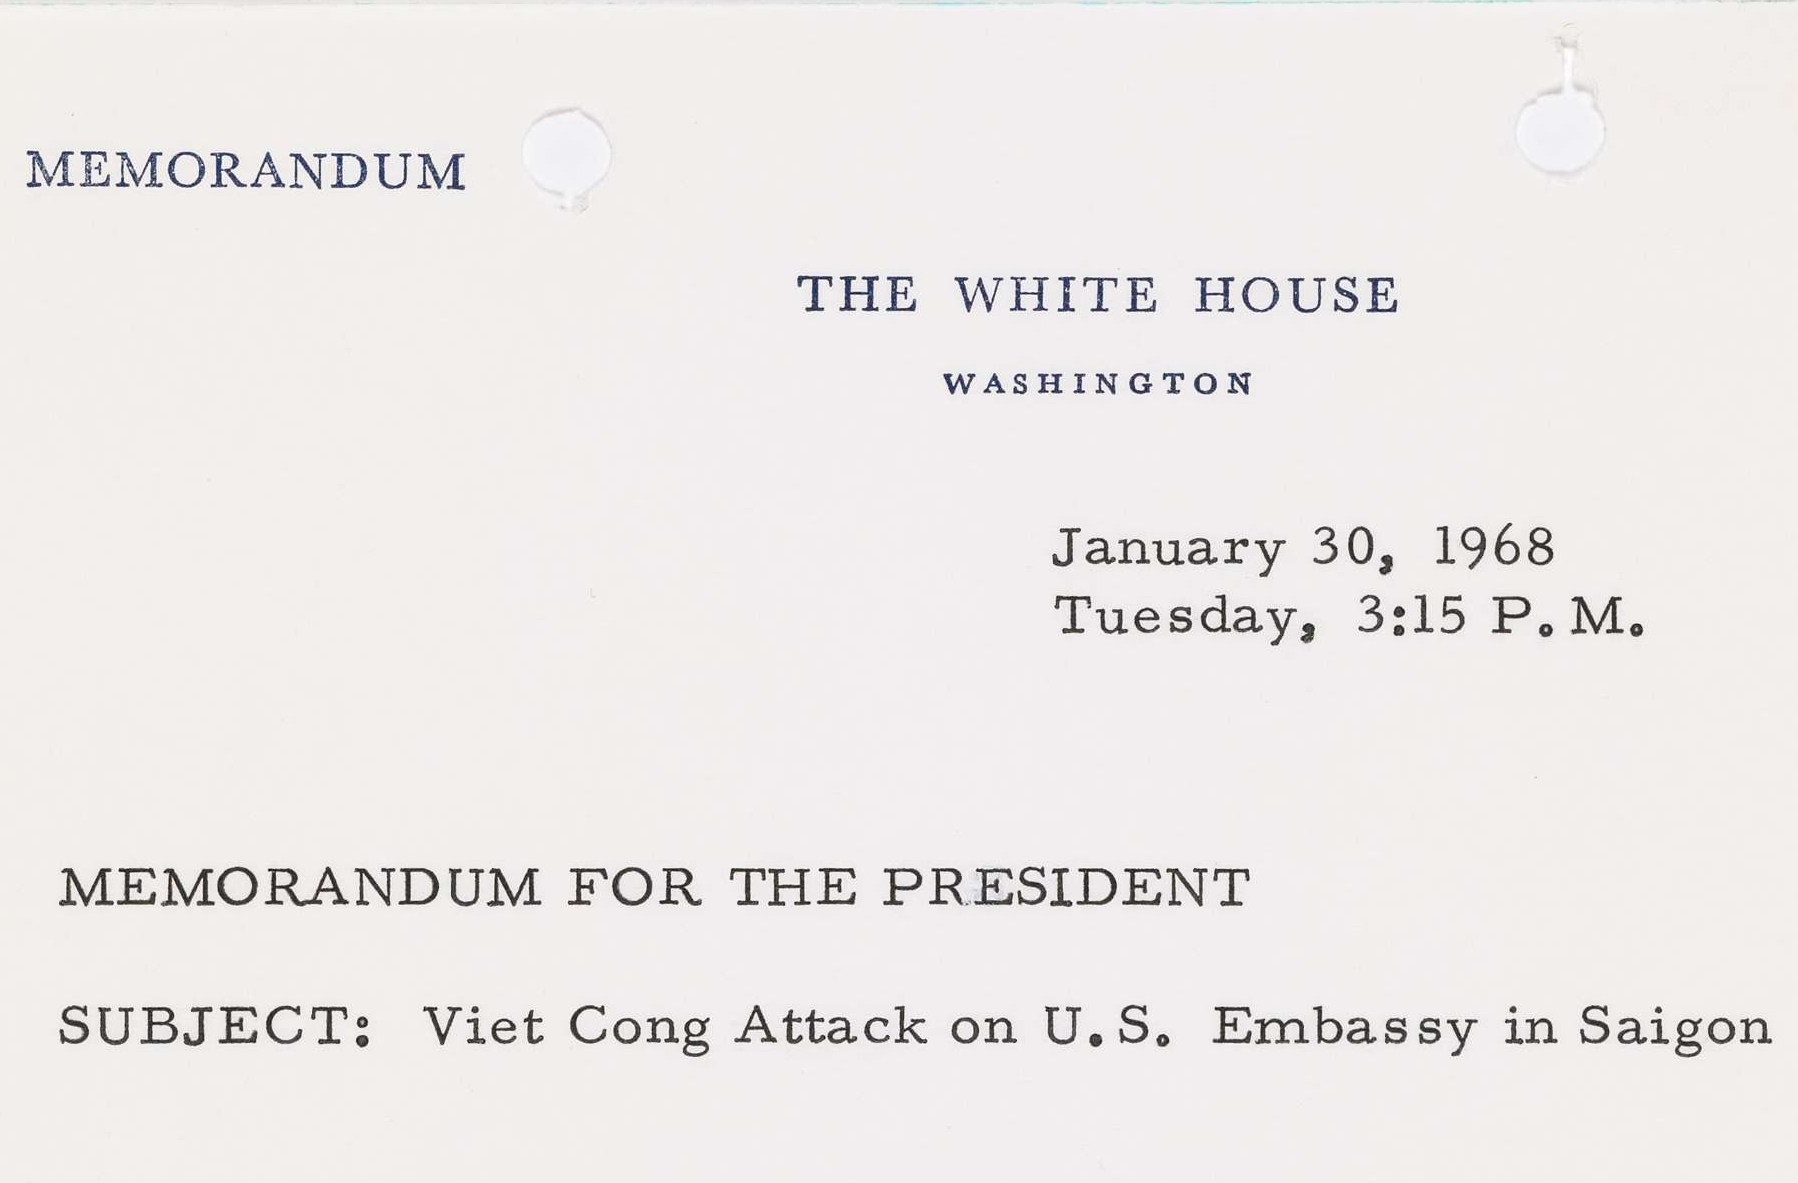 Memo from Walt W. Rostow to President Johnson